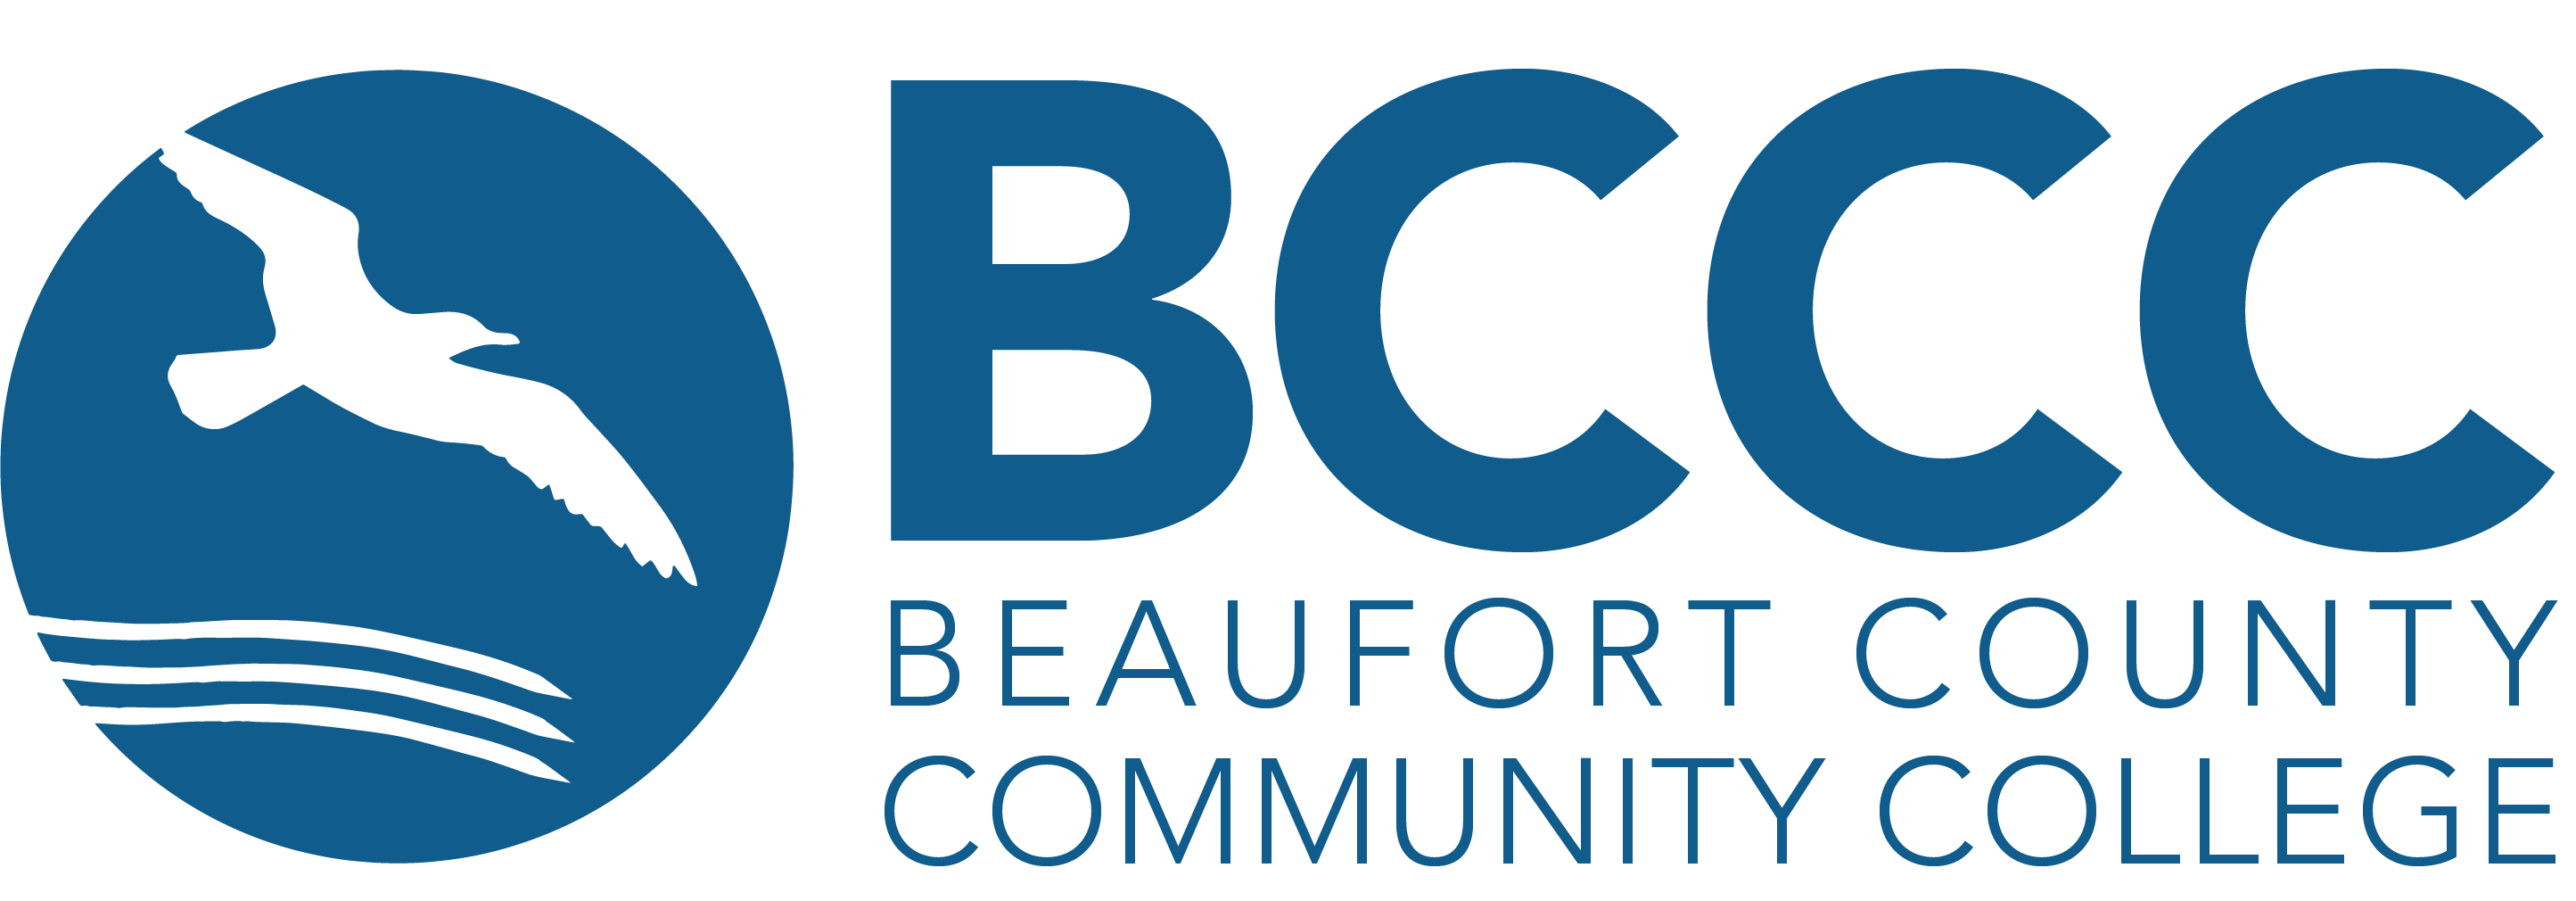 Beaufort Community College Small Business Center : Brand Short Description Type Here.